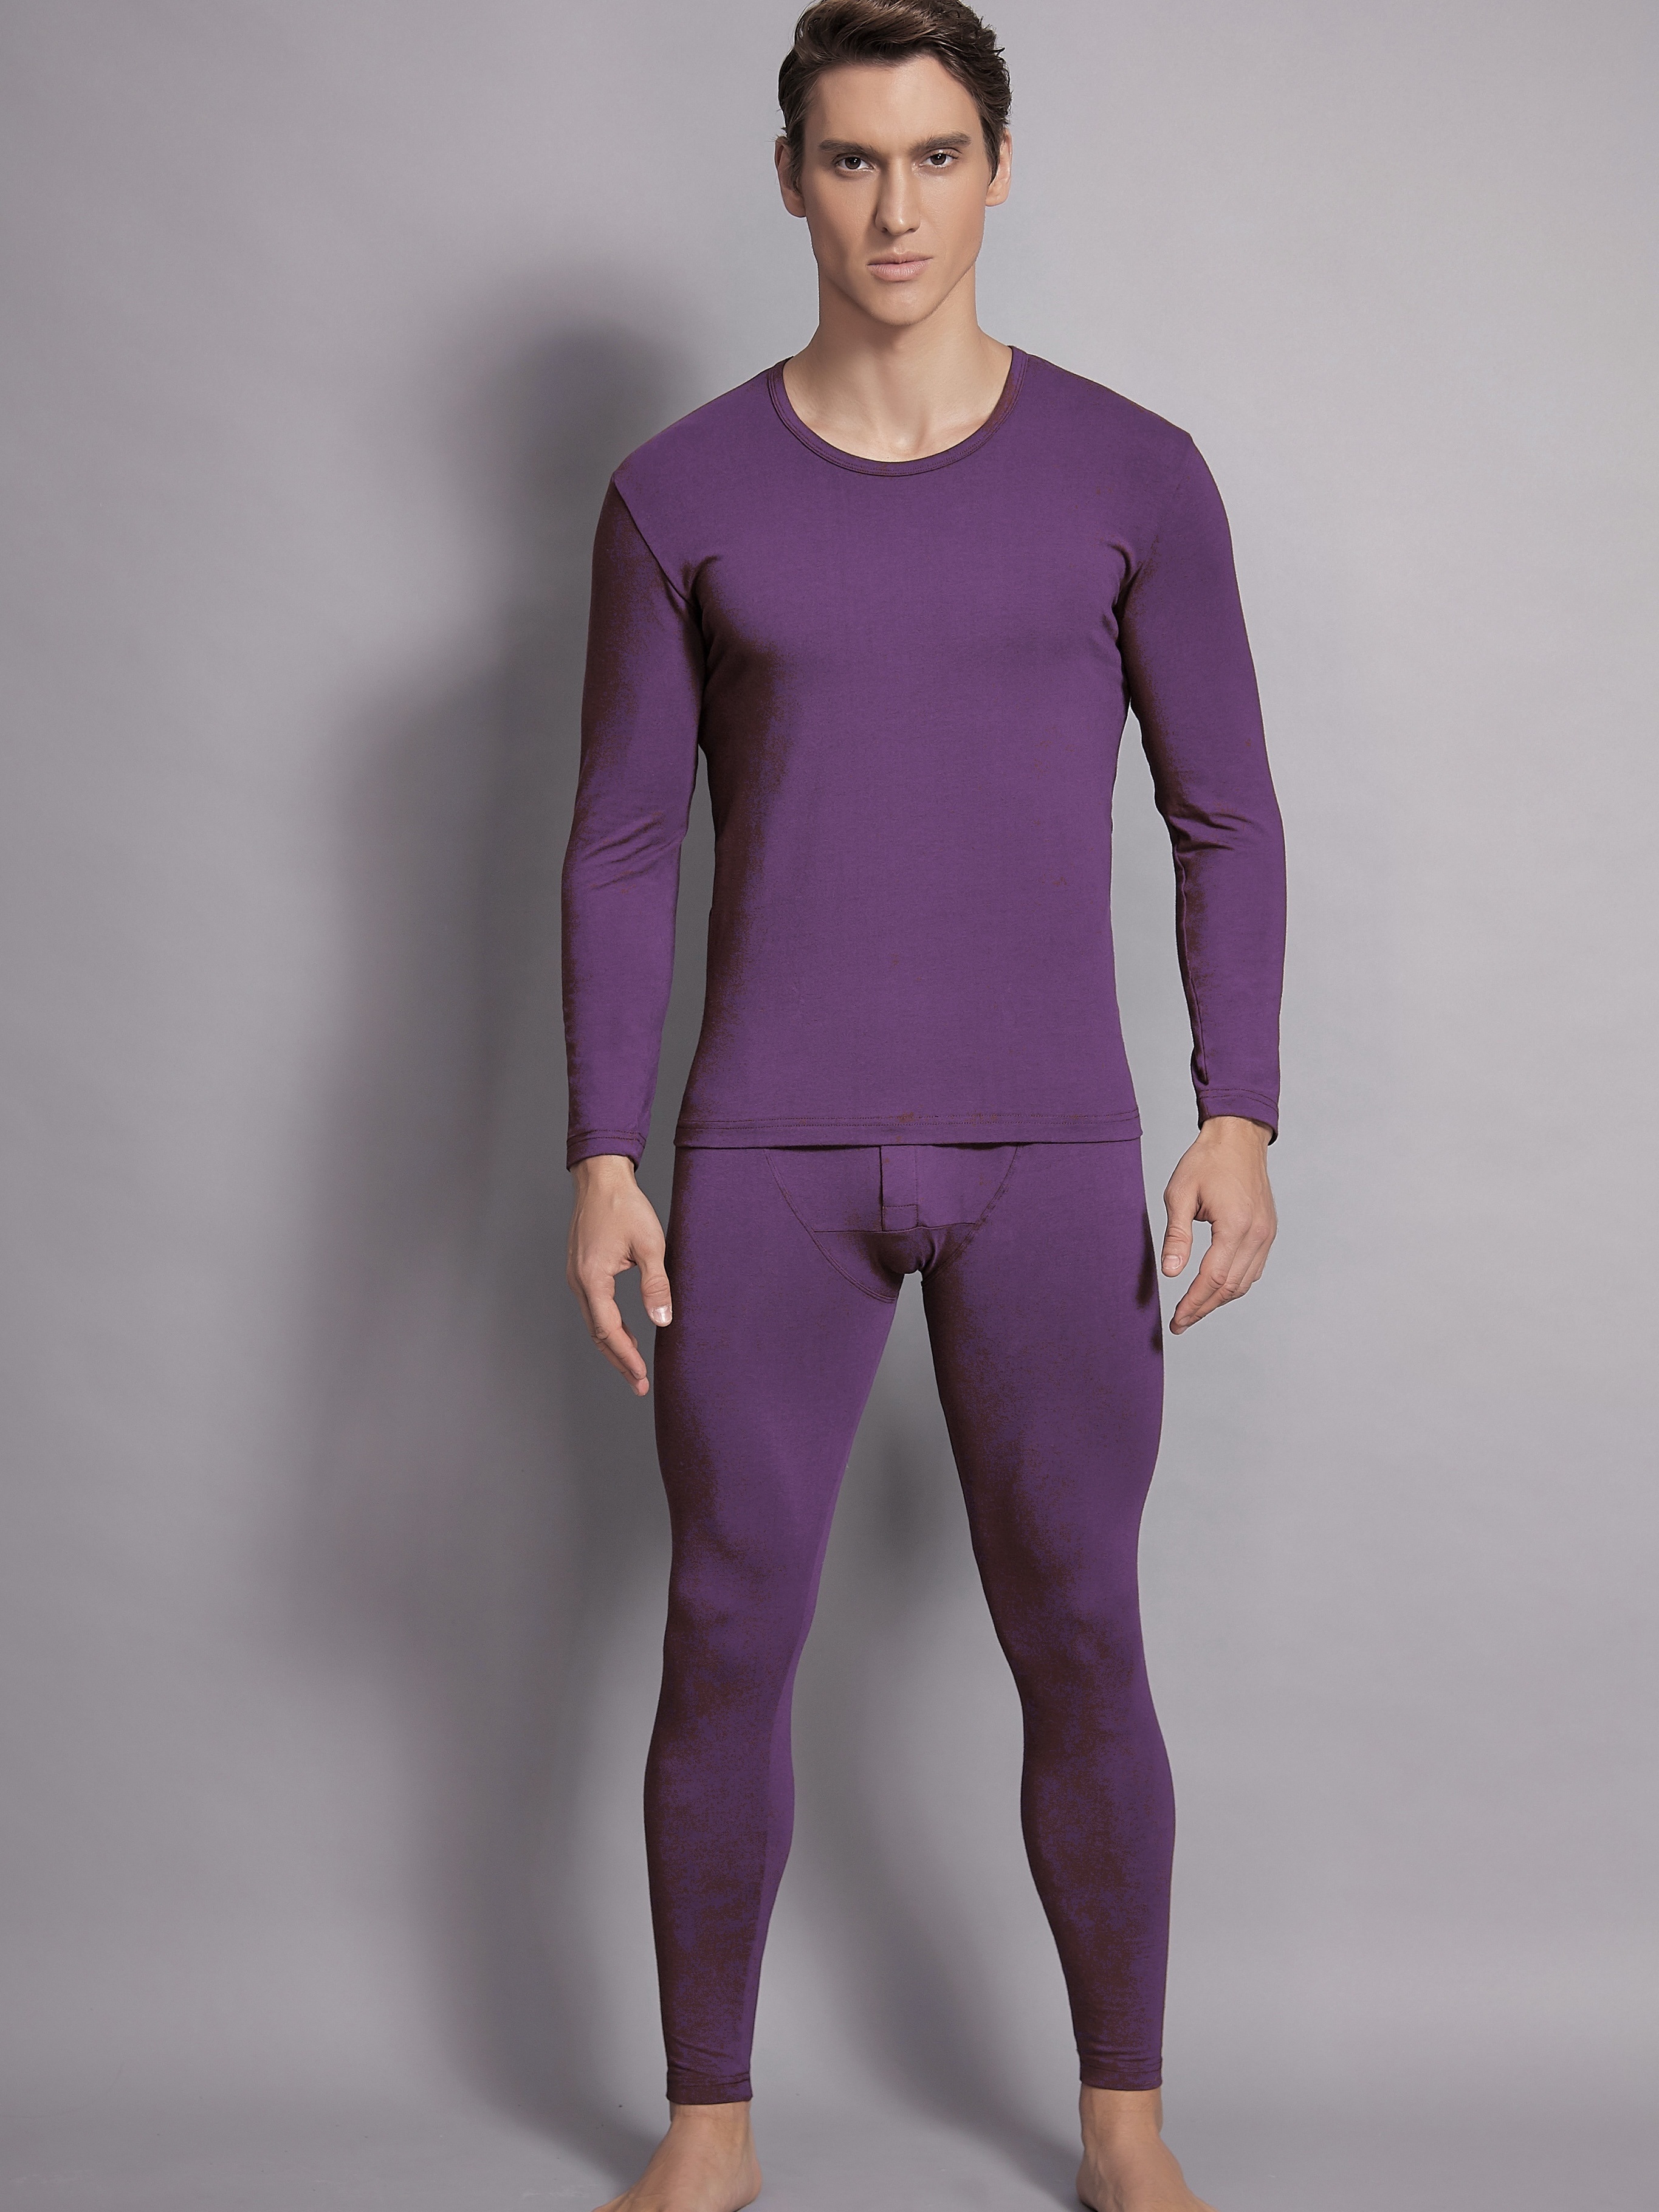 Men's Long John Thermal Underwear sets, Base Layer Sets